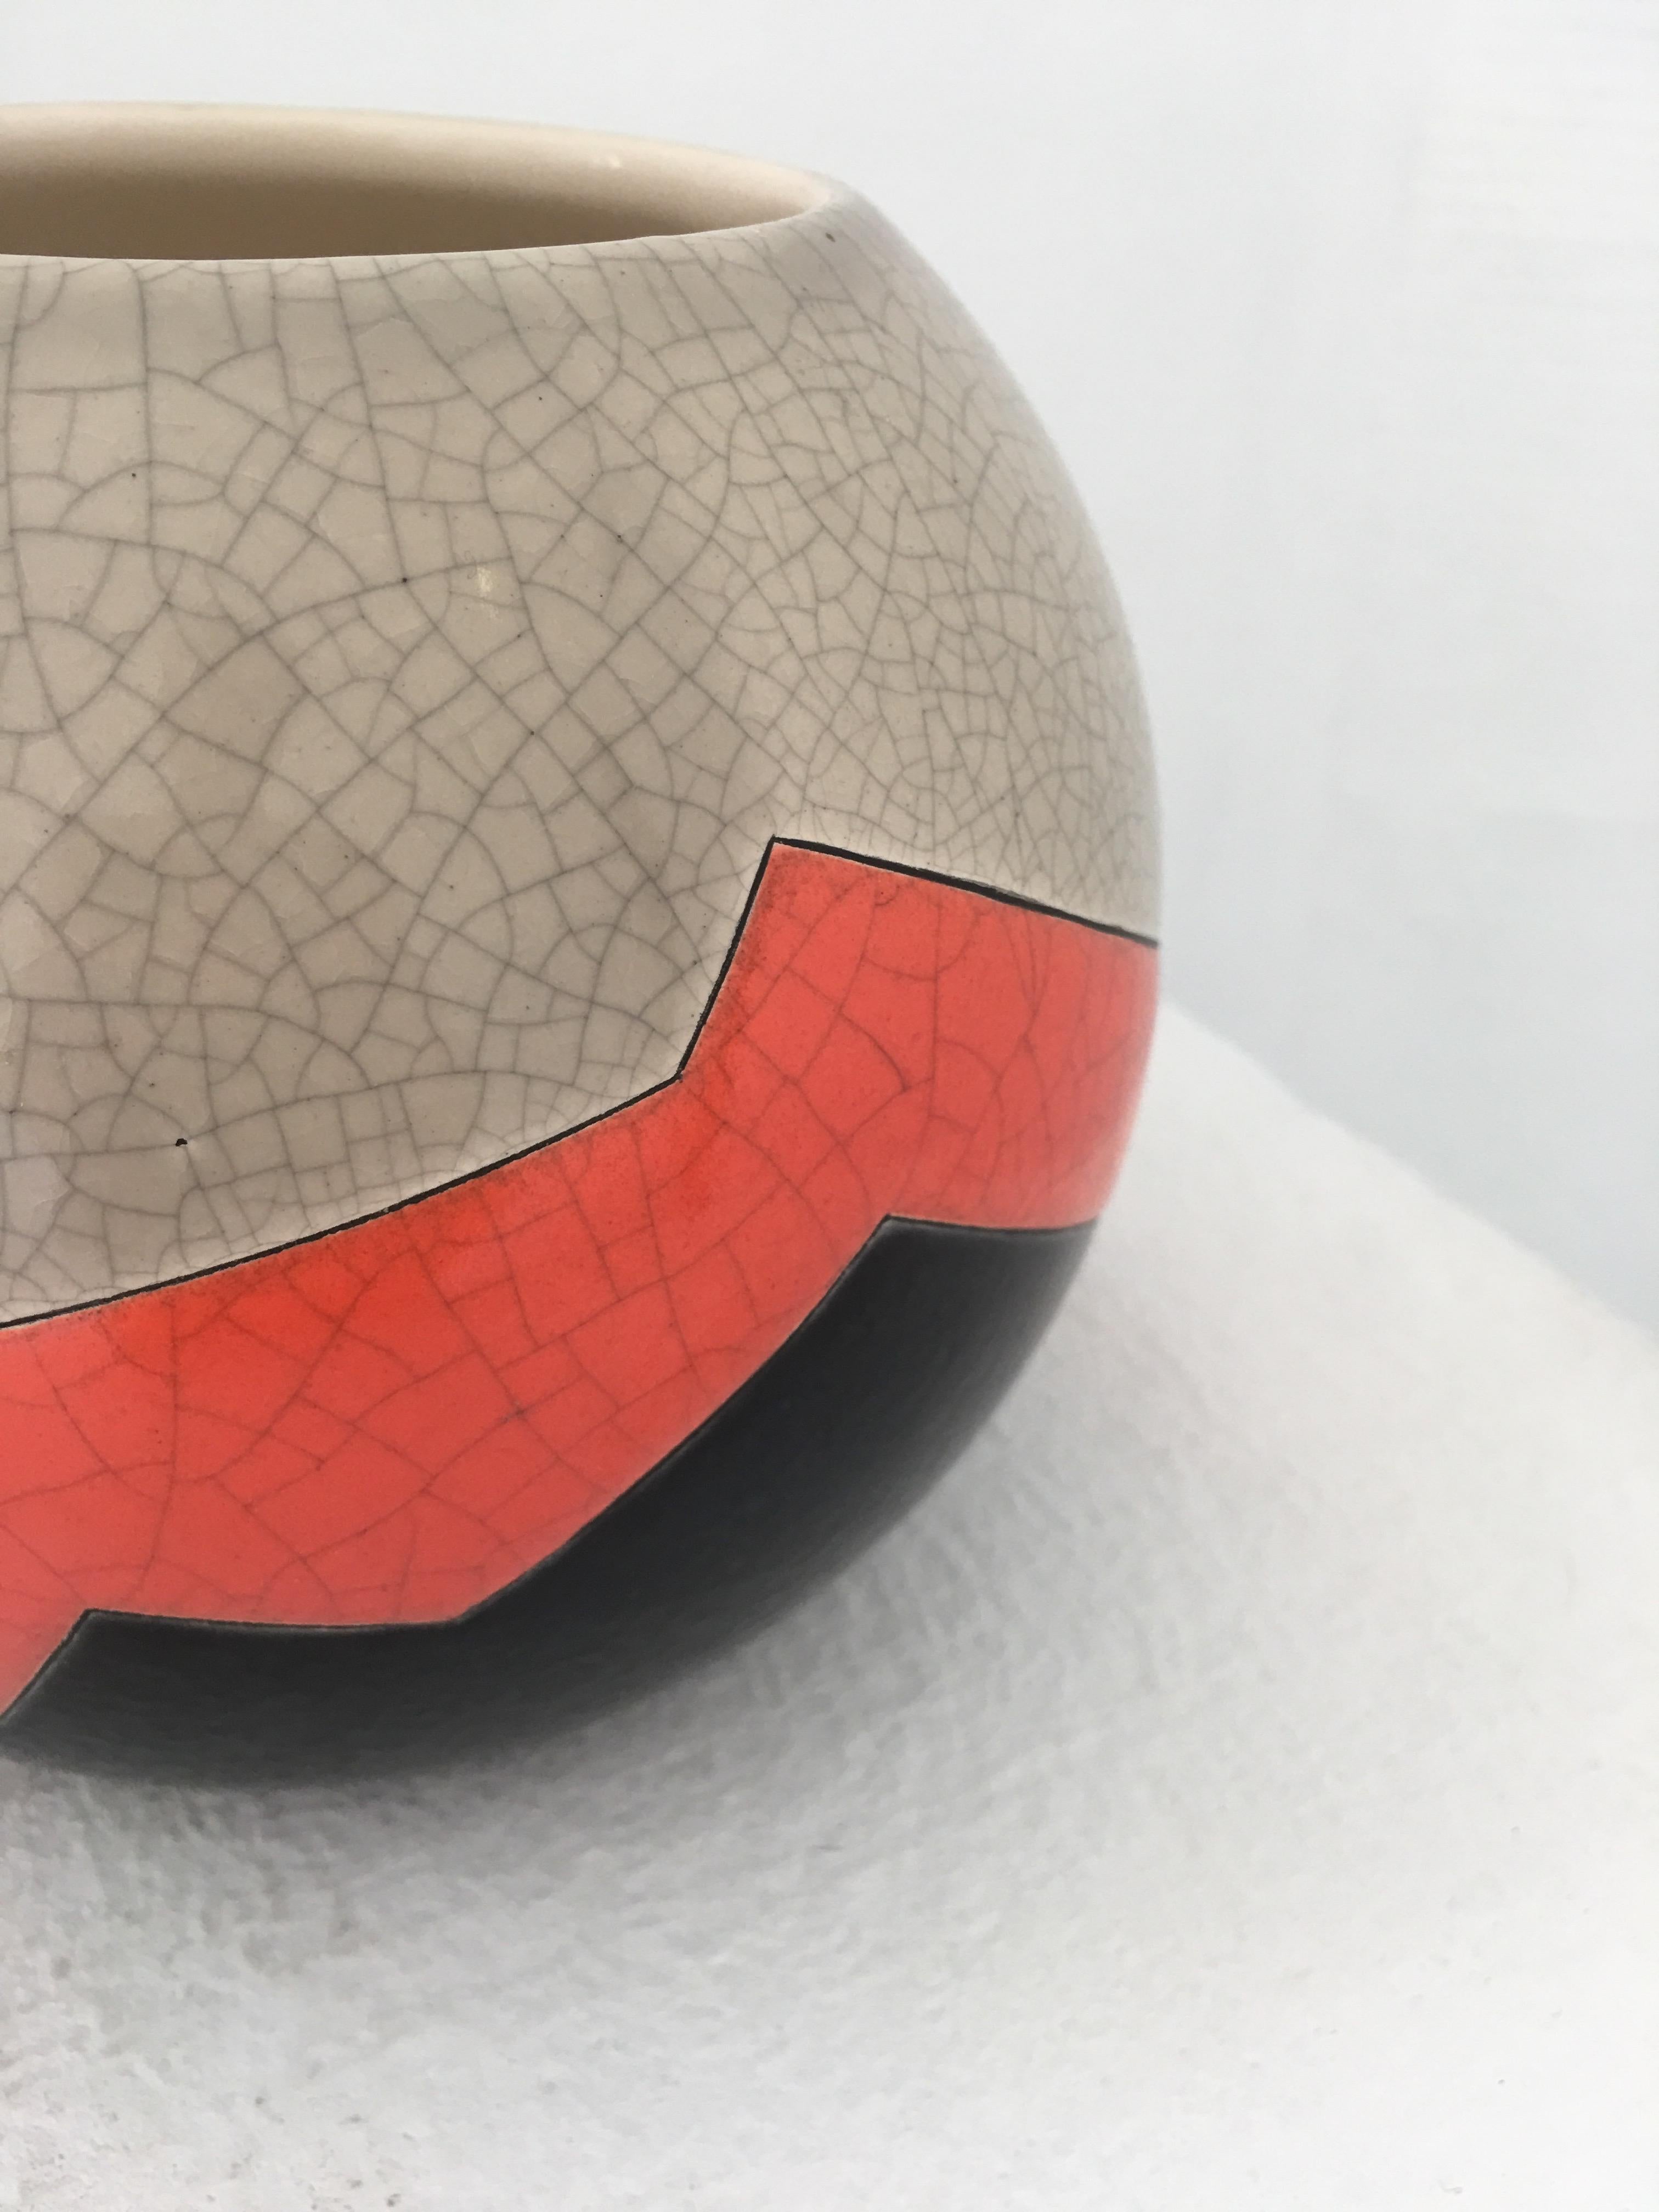 Vase Ball French Ceramist J. Suzor Geometric Pattern, Craqueling Glazelongwy For Sale 1